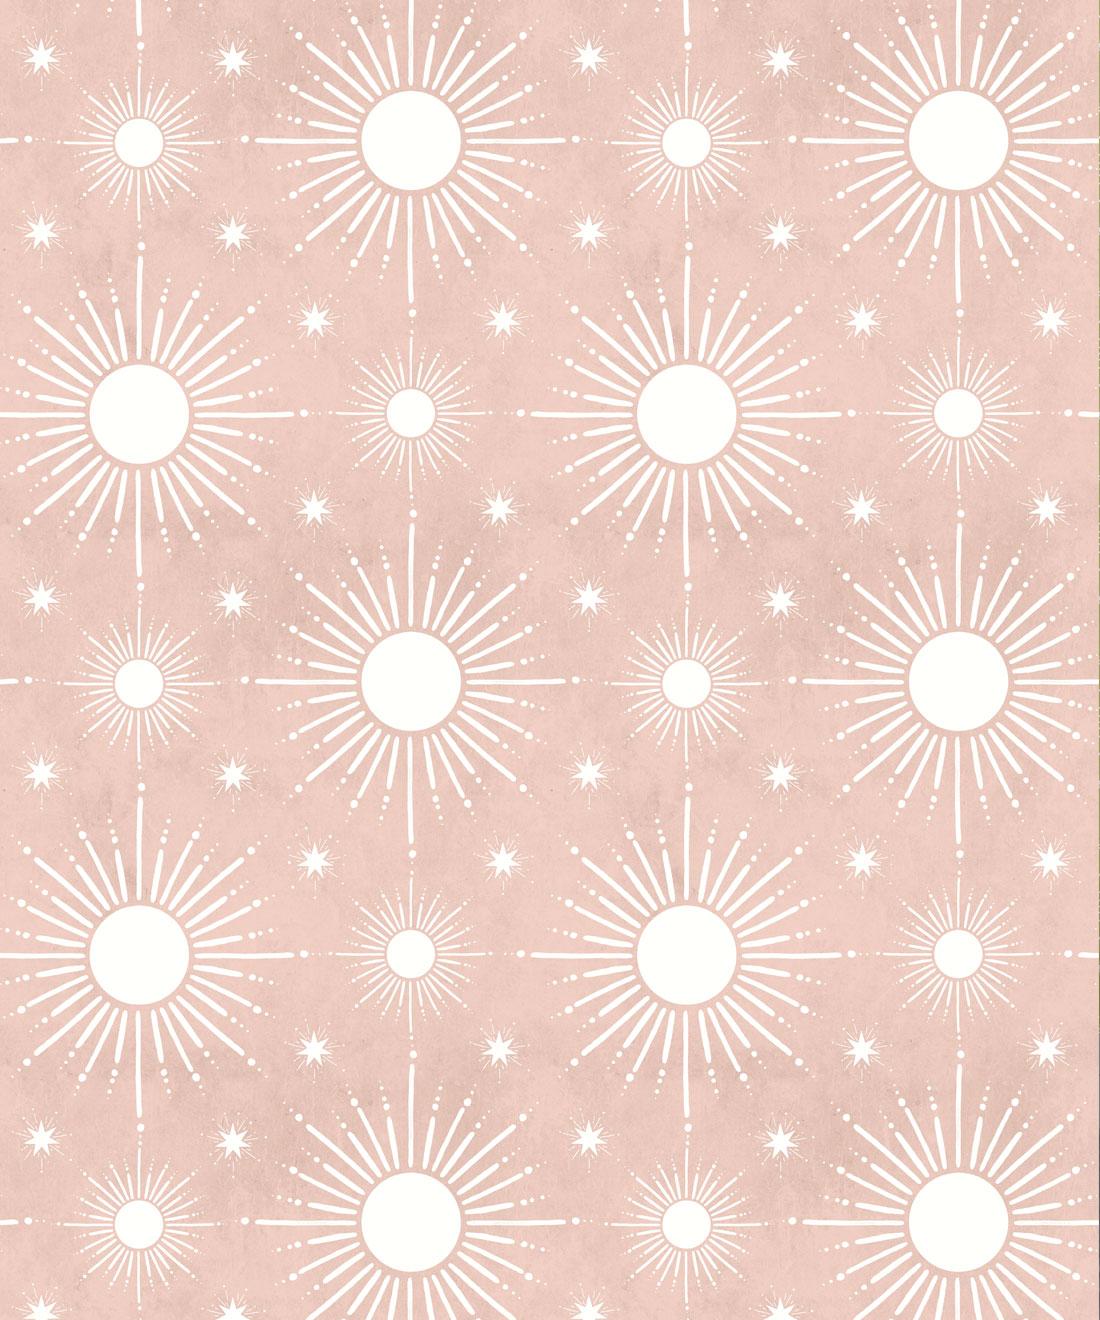 sun rays wallpaper